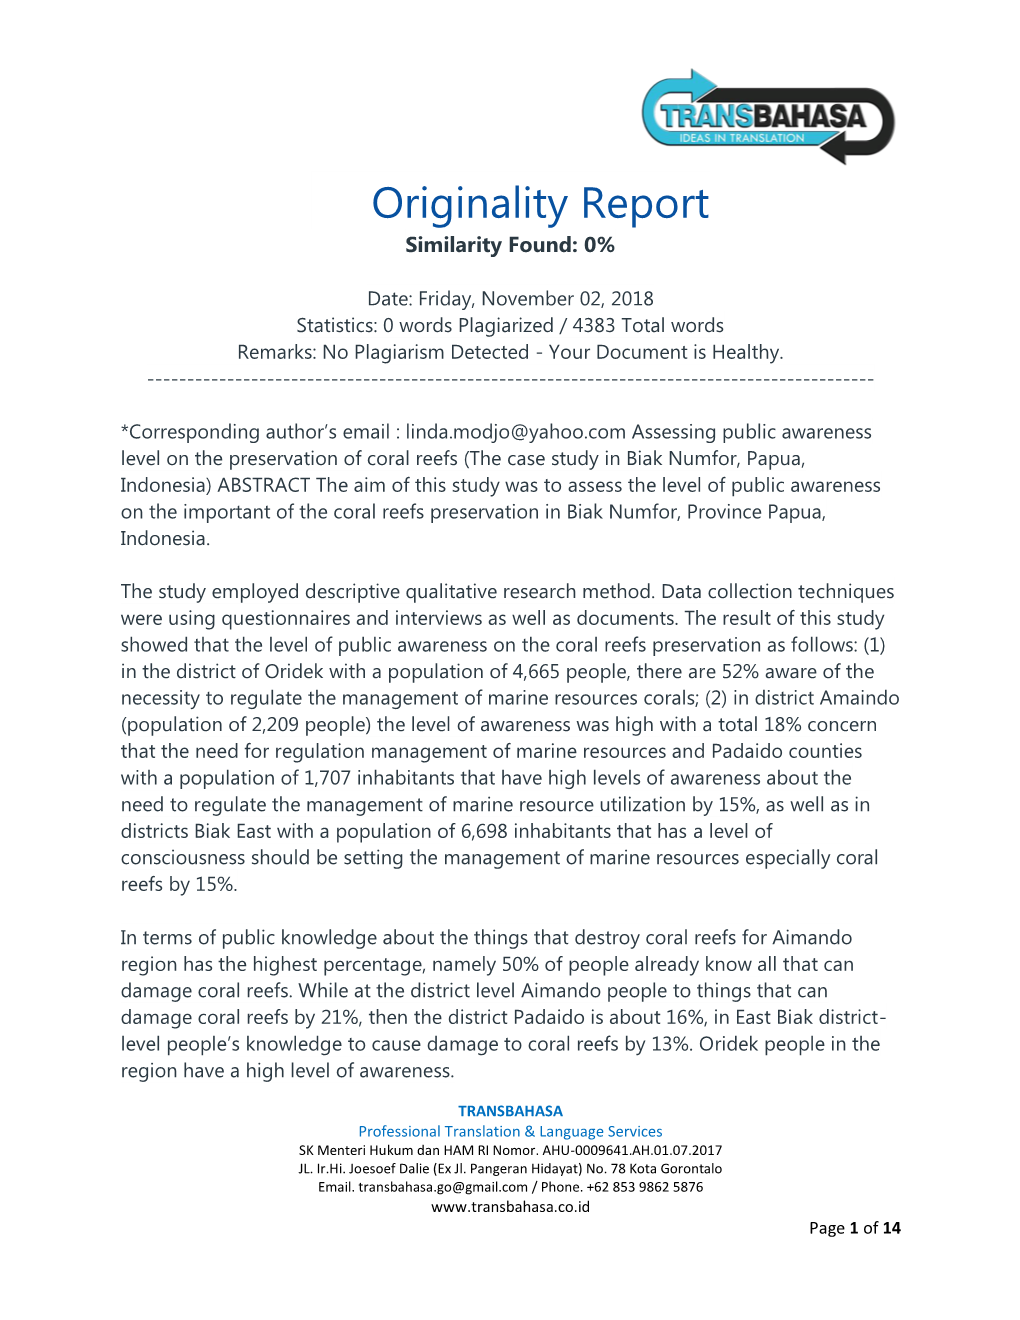 Originality Report Similarity Found: 0%